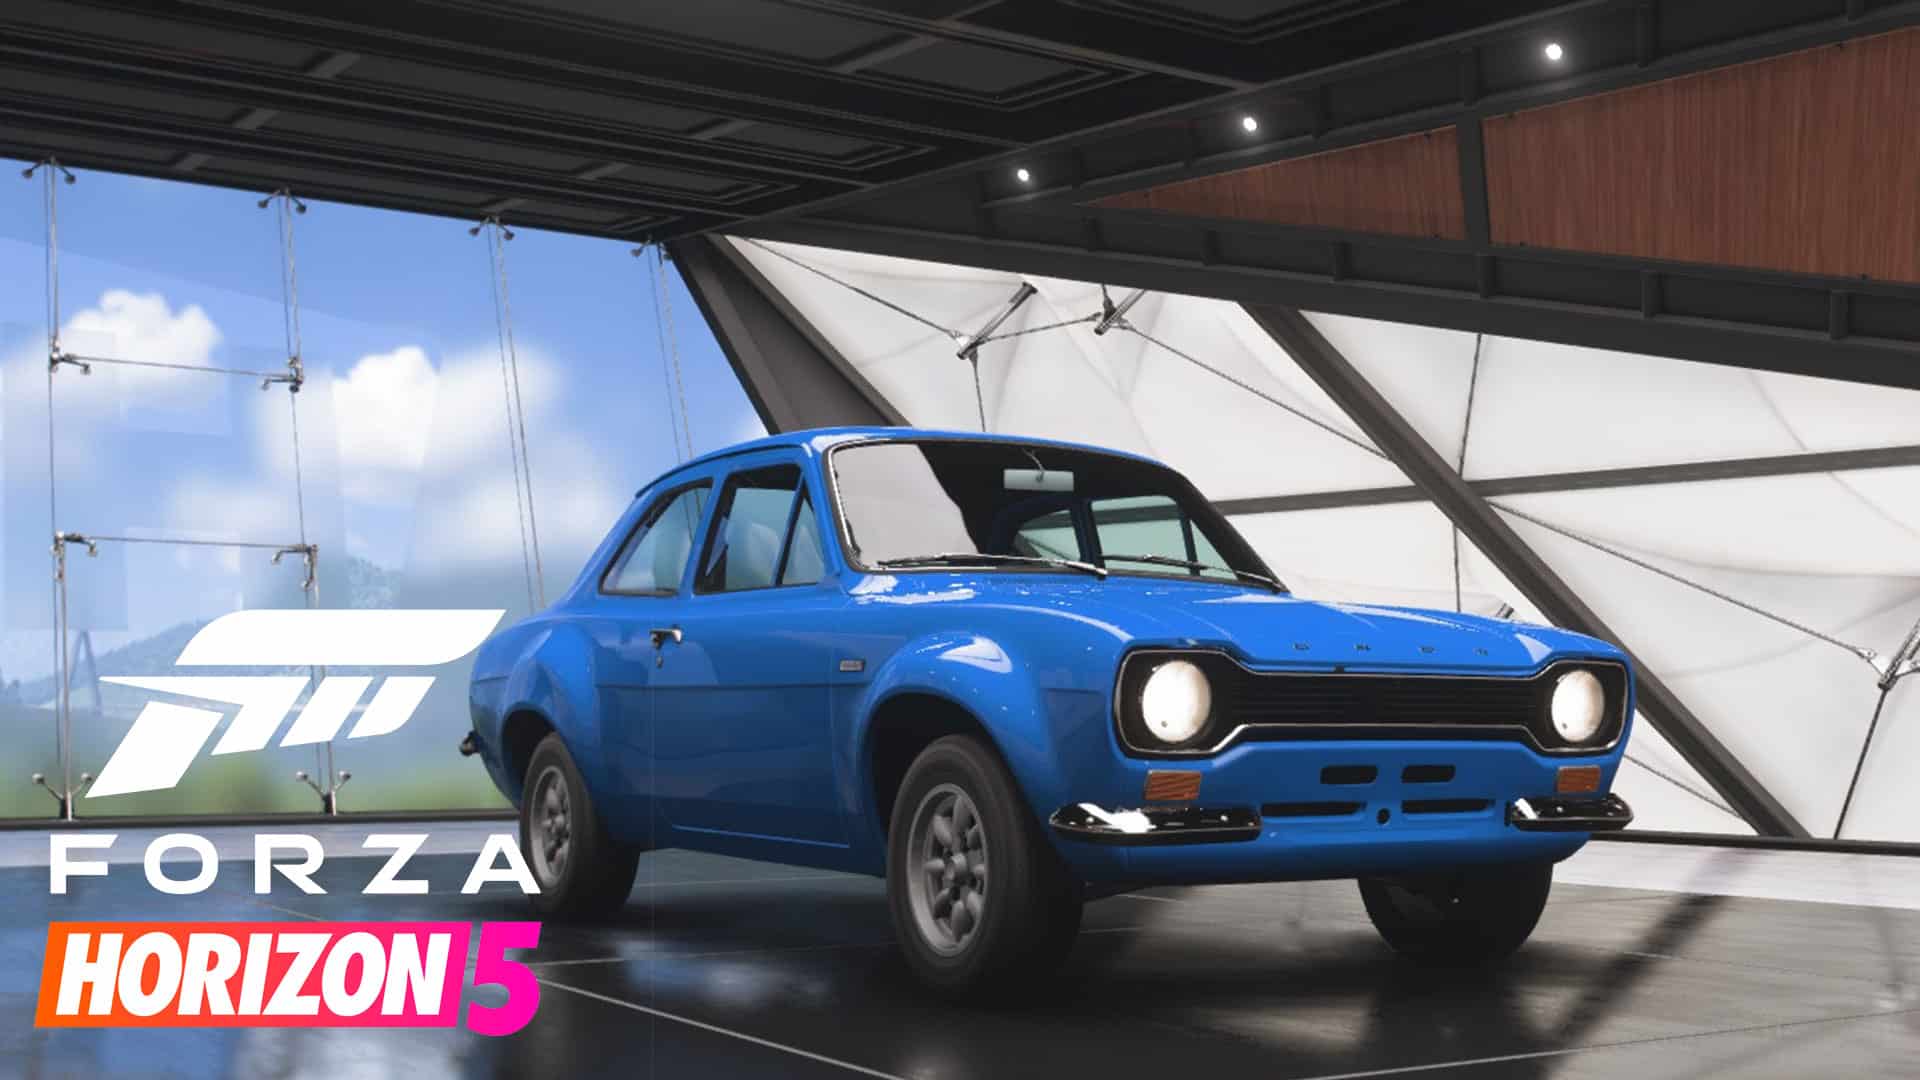 Forza Horizon 5 tuning garage with blue car